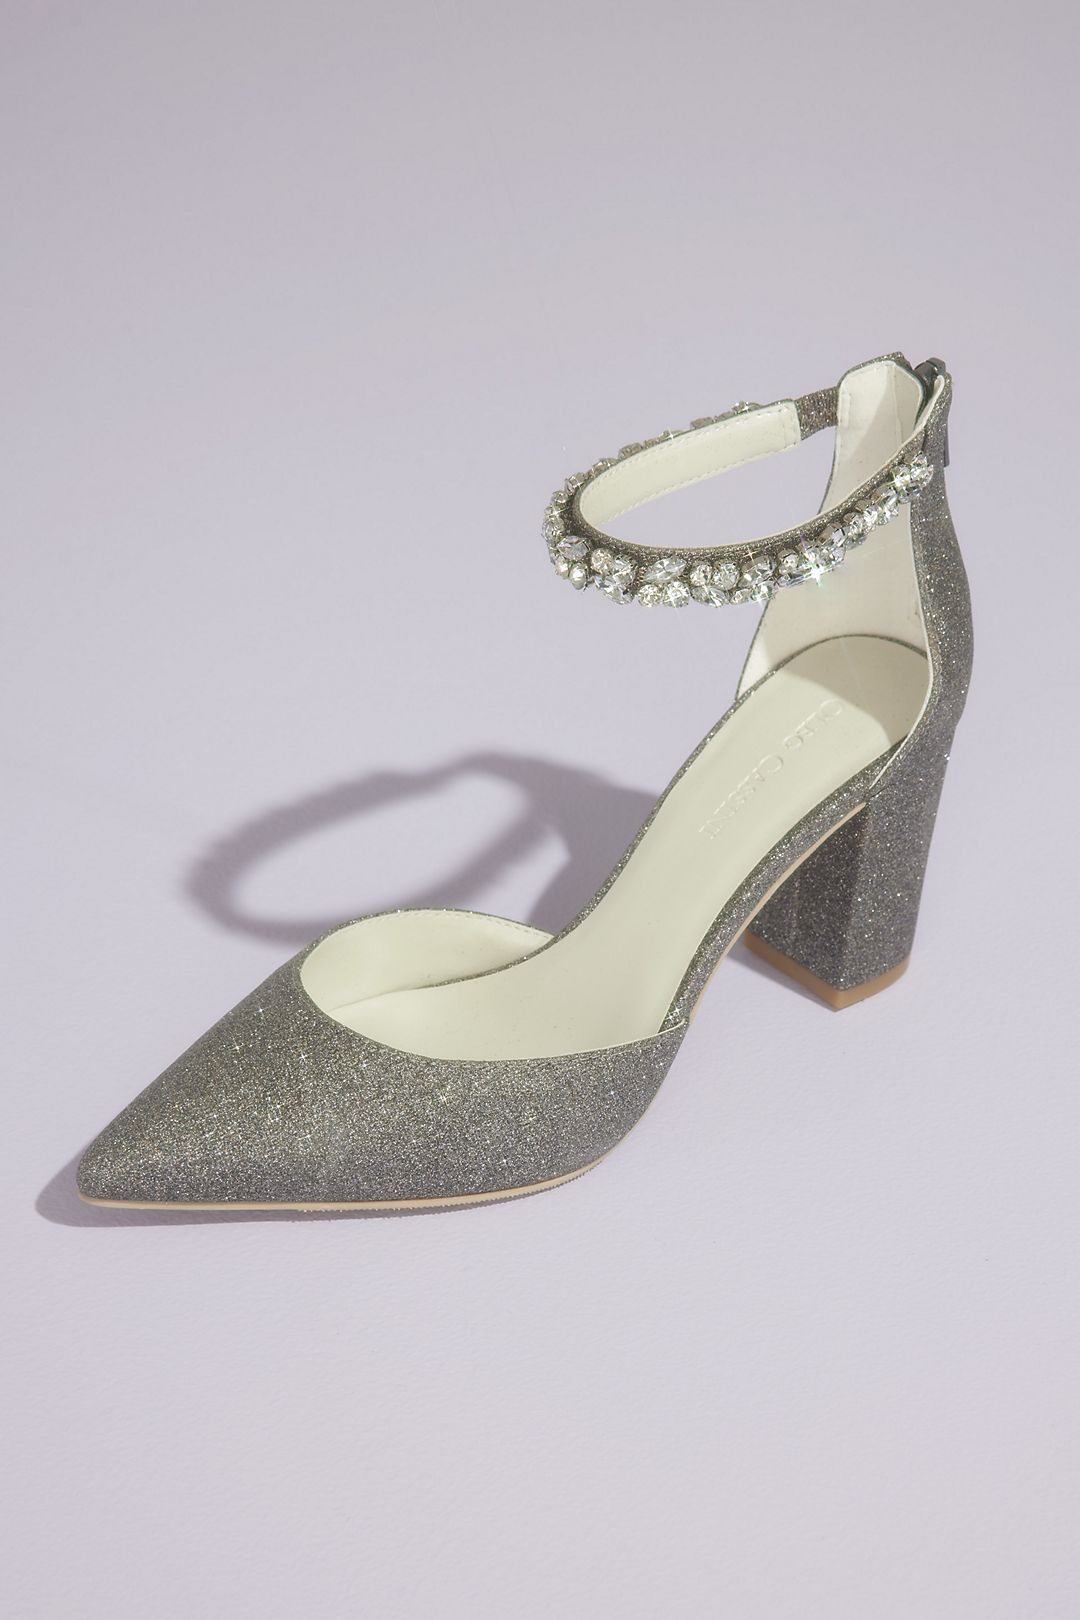 Crystal Strap Glitter Pointed Toe Block Heels Image 1